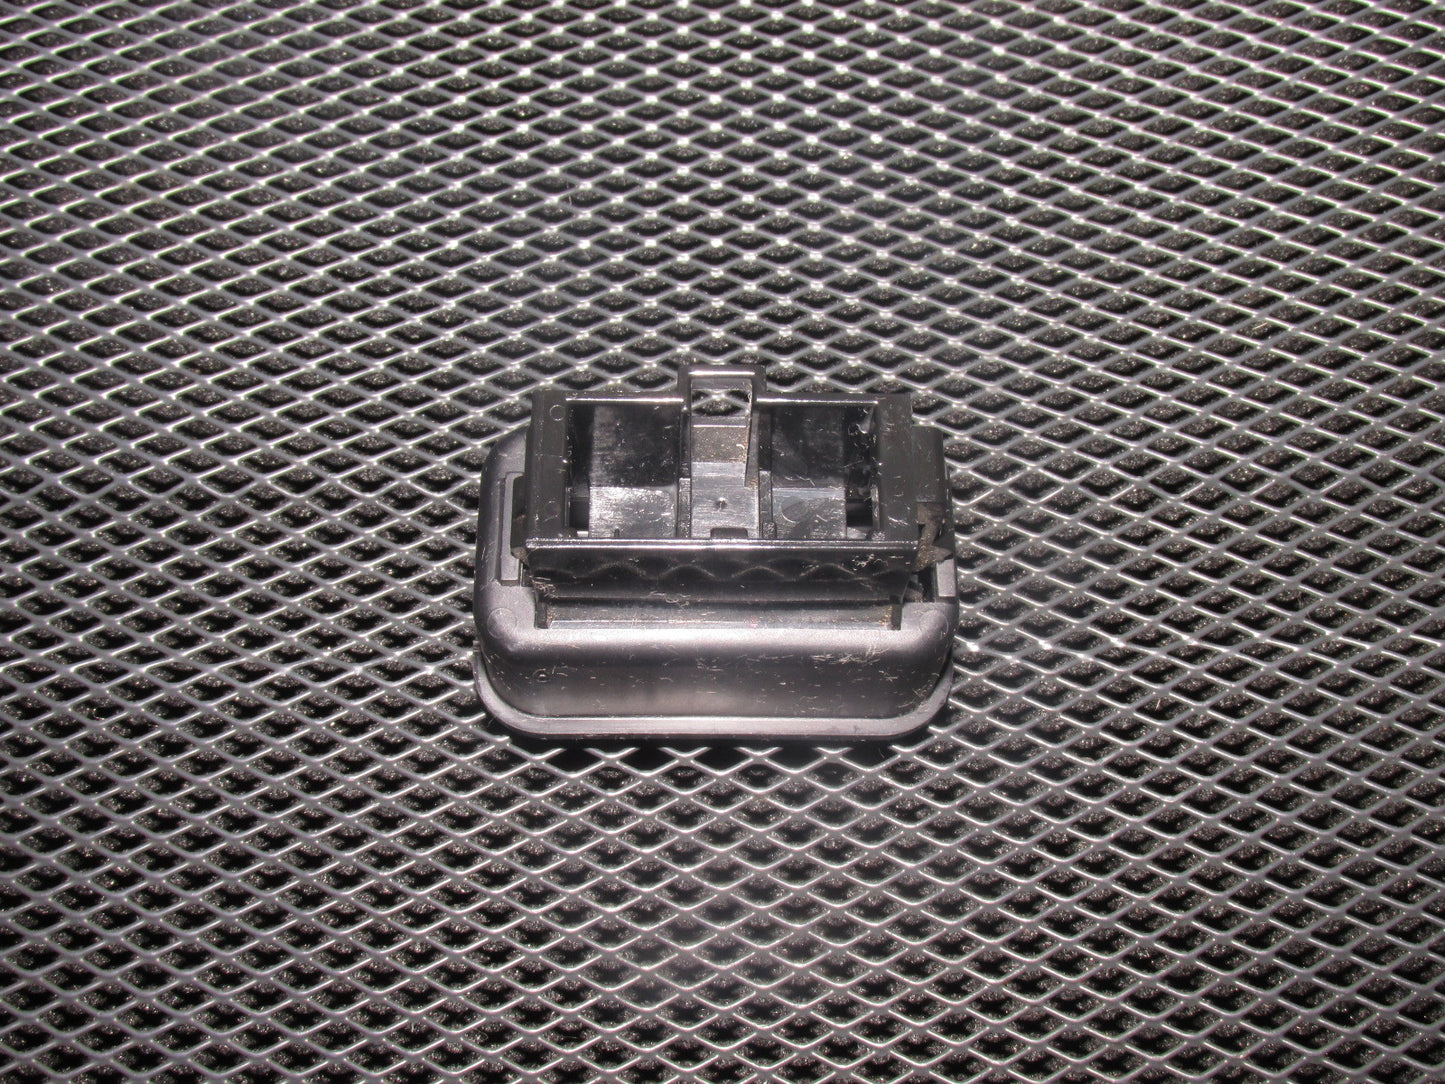 94 95 96 97 Mazda Miata OEM Dash Switch Filler Cap